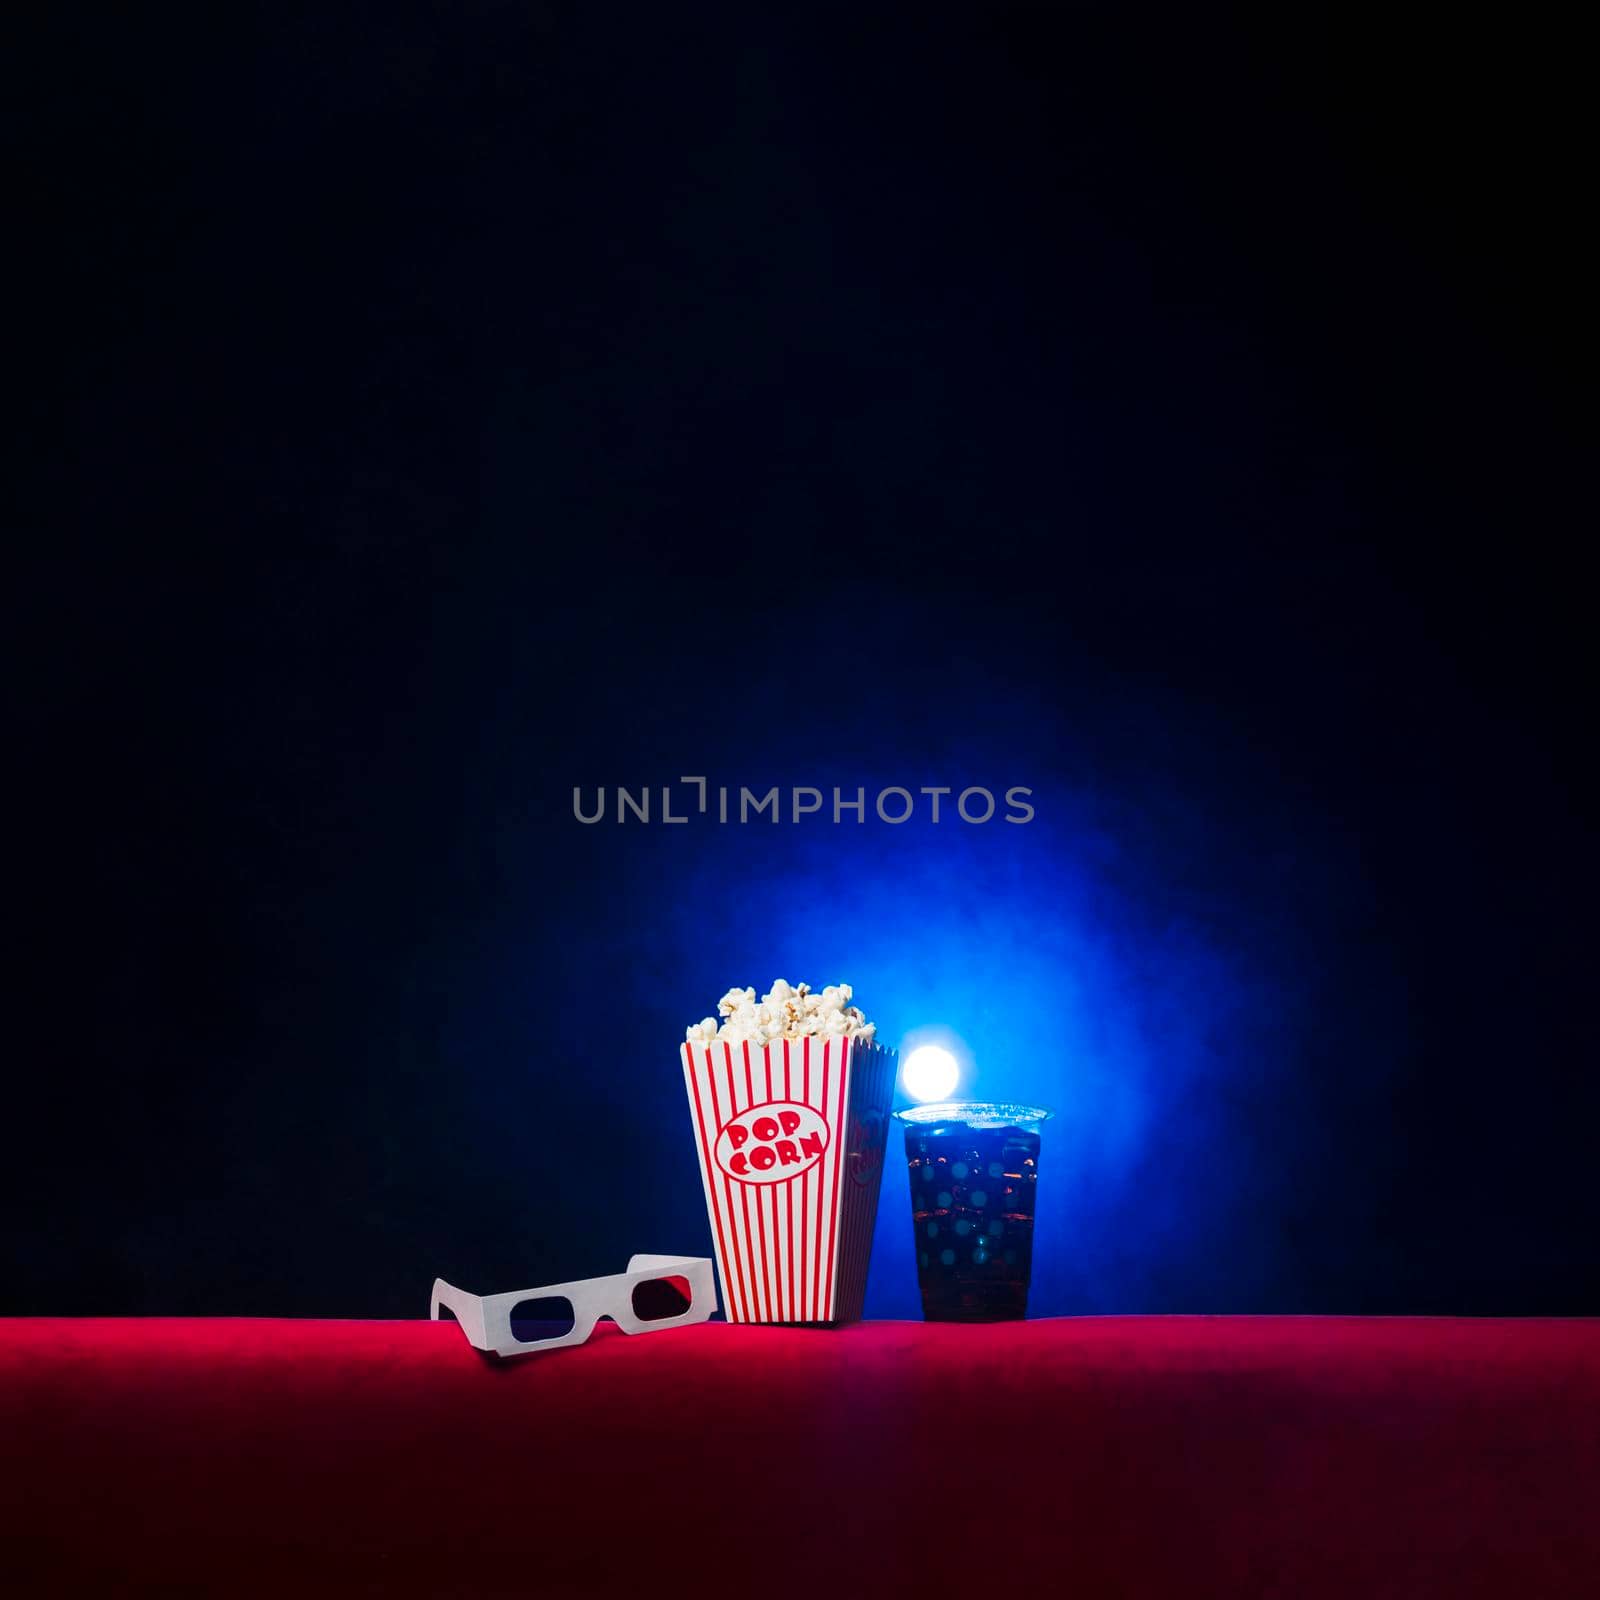 cinema with popcorn box. Beautiful photo